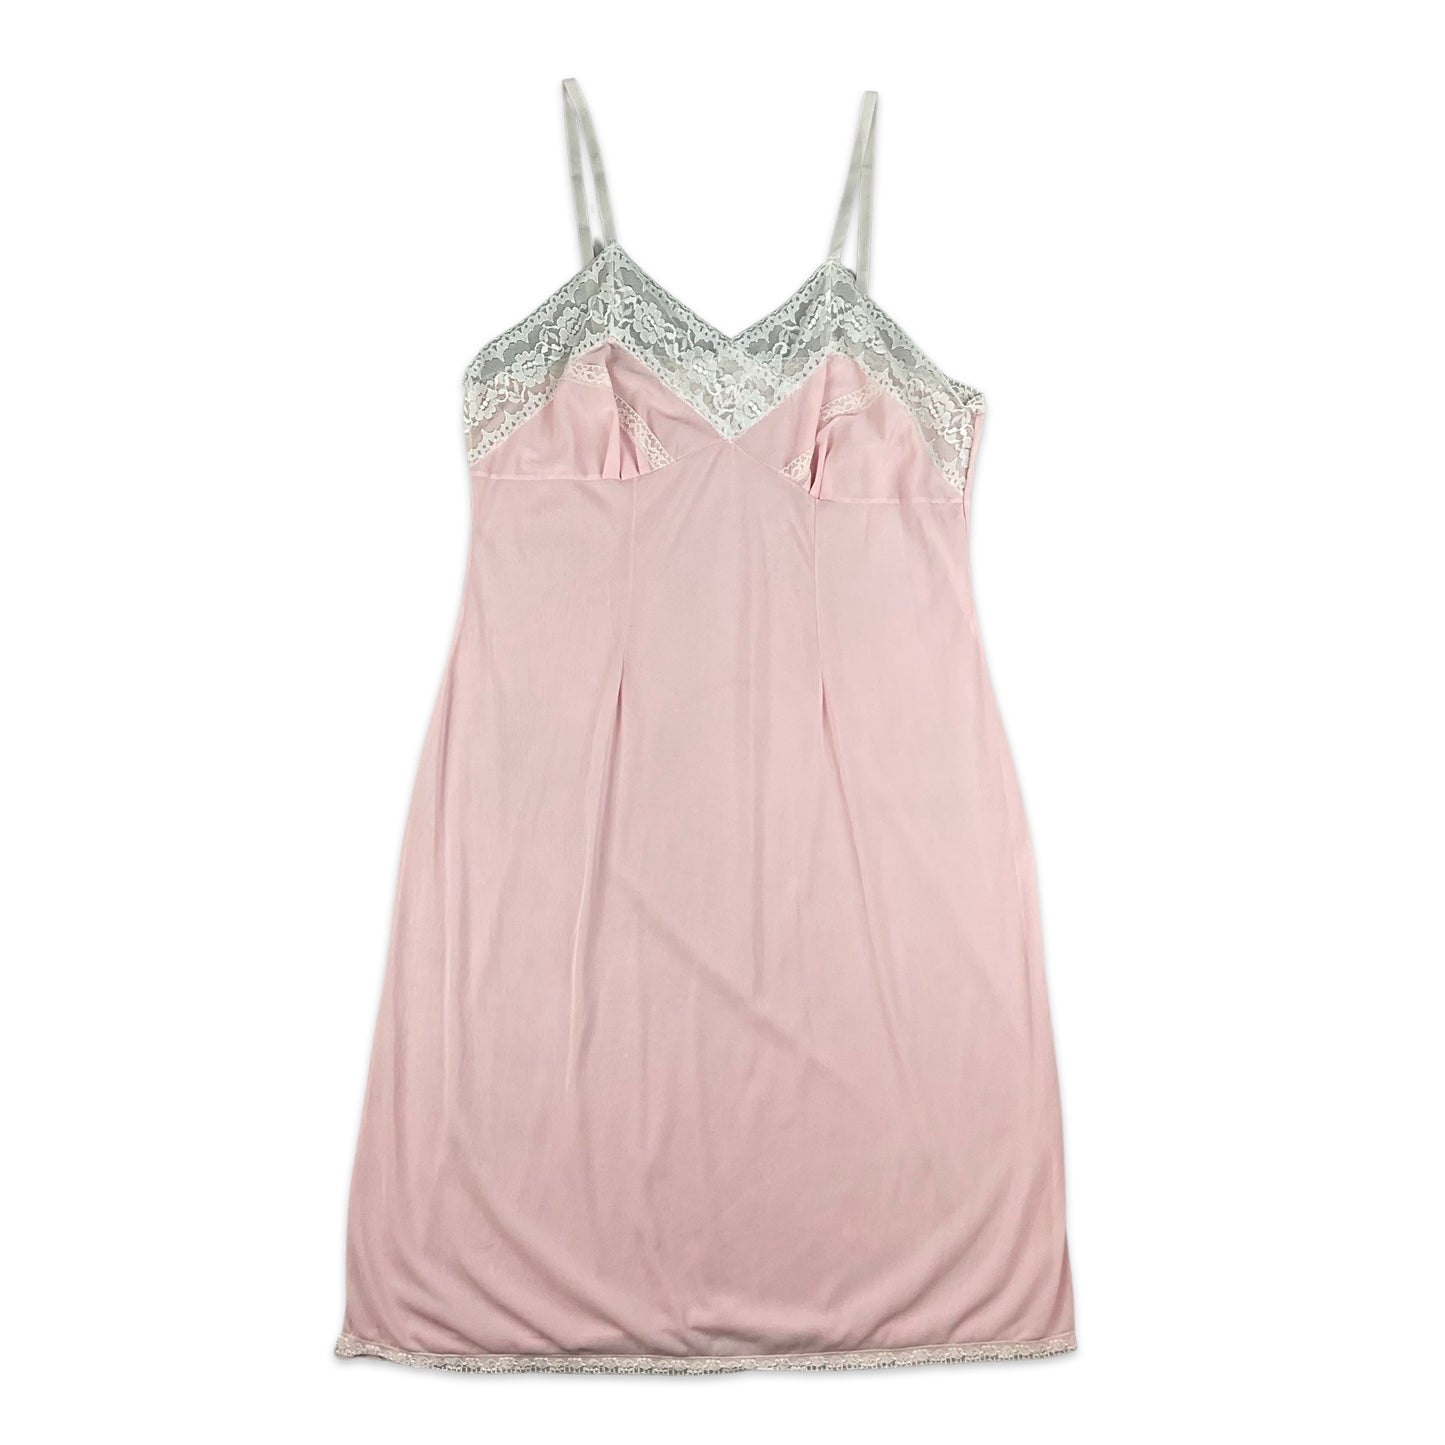 90s Baby Pink & White Lace Slip Dress